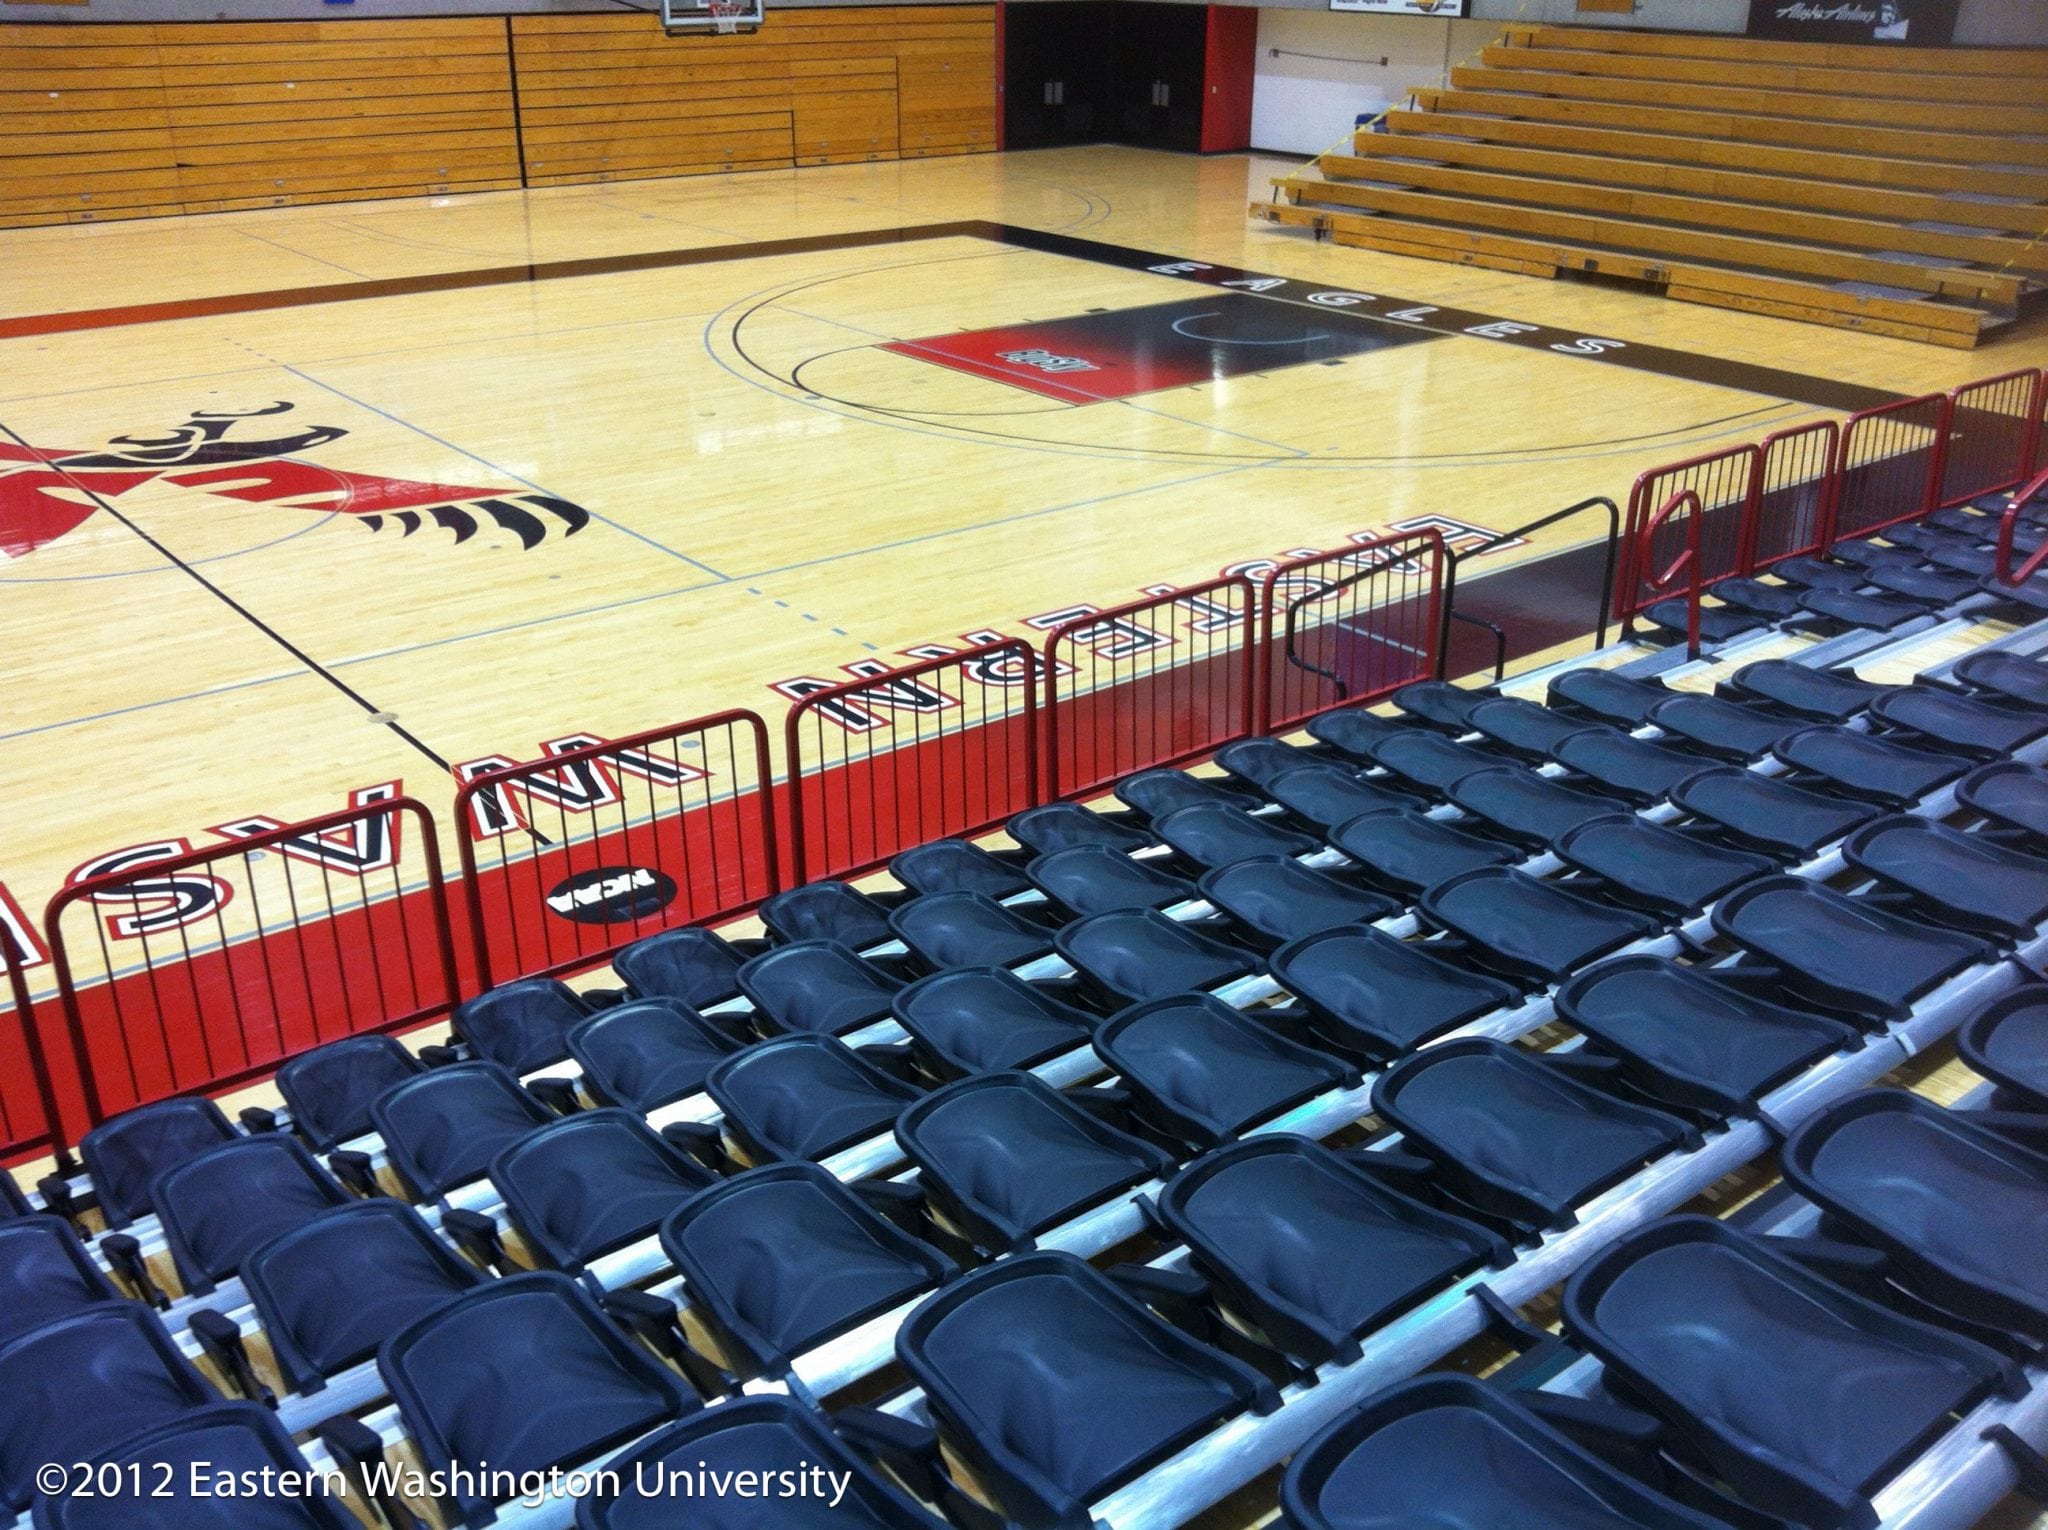 the University's Rec Center basketball court